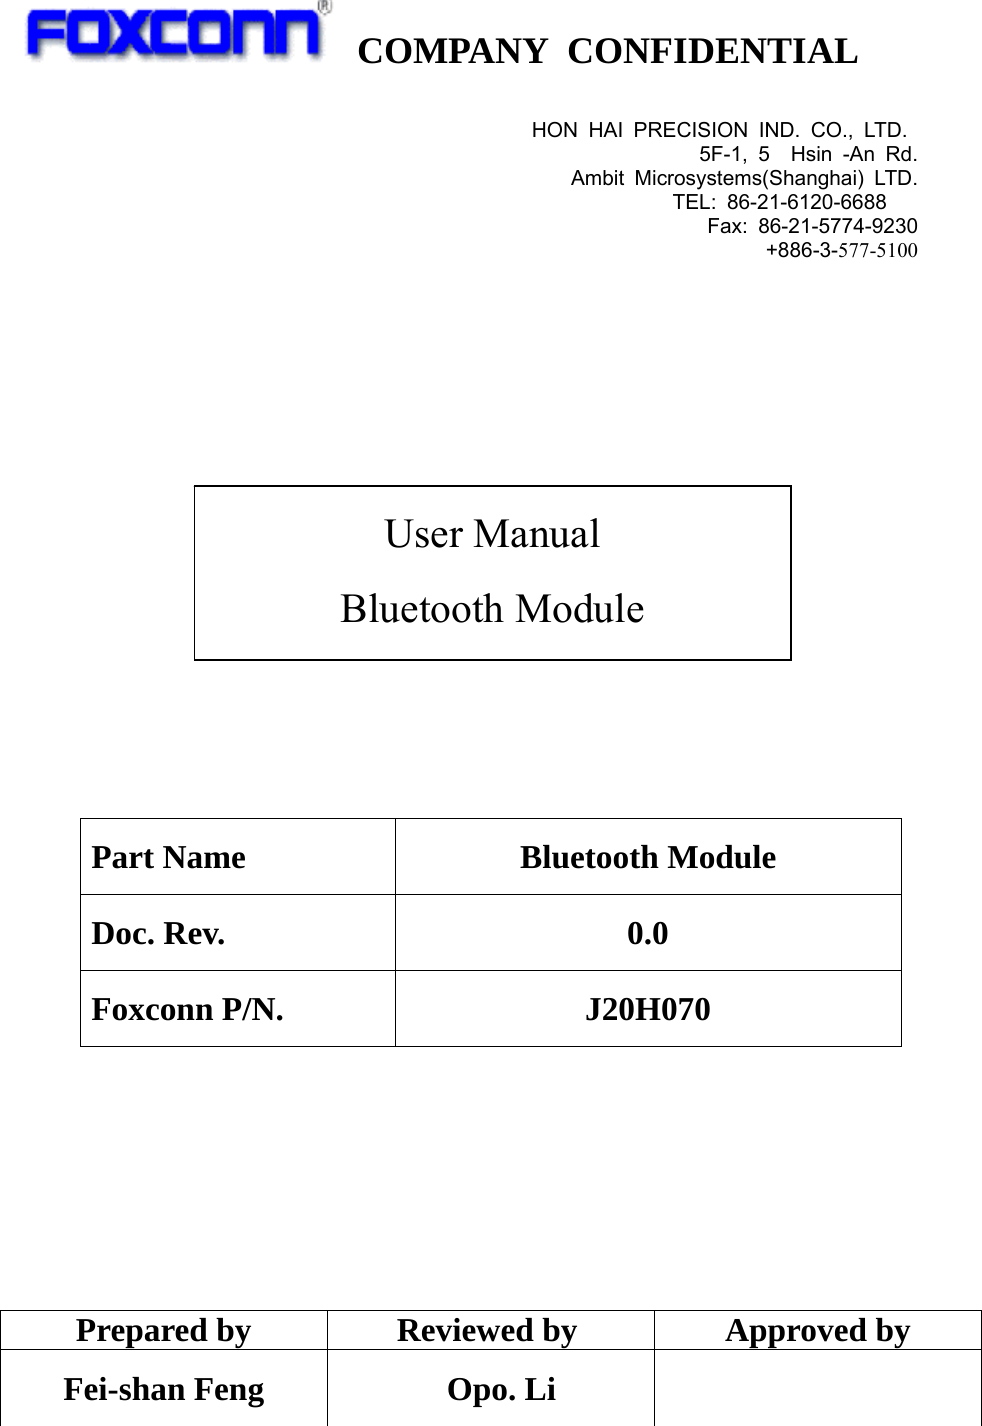   COMPANY CONFIDENTIAL                                Part Name  Bluetooth Module Doc. Rev.  0.0 Foxconn P/N.  J20H070        Prepared by  Reviewed by  Approved by Fei-shan Feng         Opo. Li   User Manual Bluetooth Module HON HAI PRECISION IND. CO., LTD. 5F-1, 5  Hsin -An Rd.Ambit Microsystems(Shanghai) LTD.TEL: 86-21-6120-6688   Fax: 86-21-5774-9230+886-3-577-5100